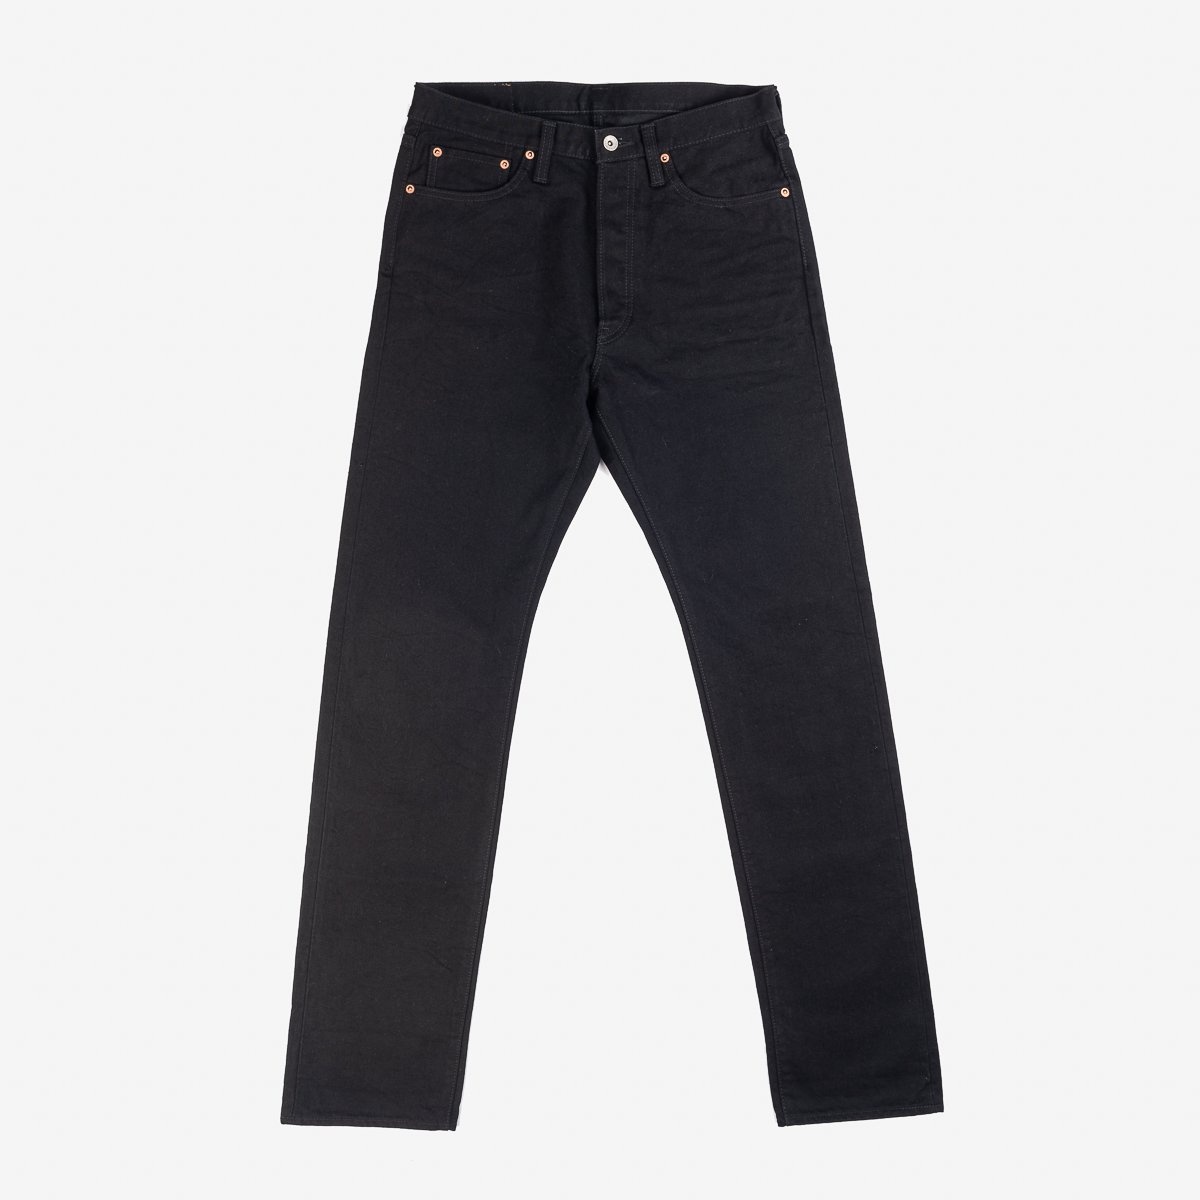 IH-888S-142bb 14oz Selvedge Denim Medium/High Rise Tapered Cut Jeans - Black/Black - 1